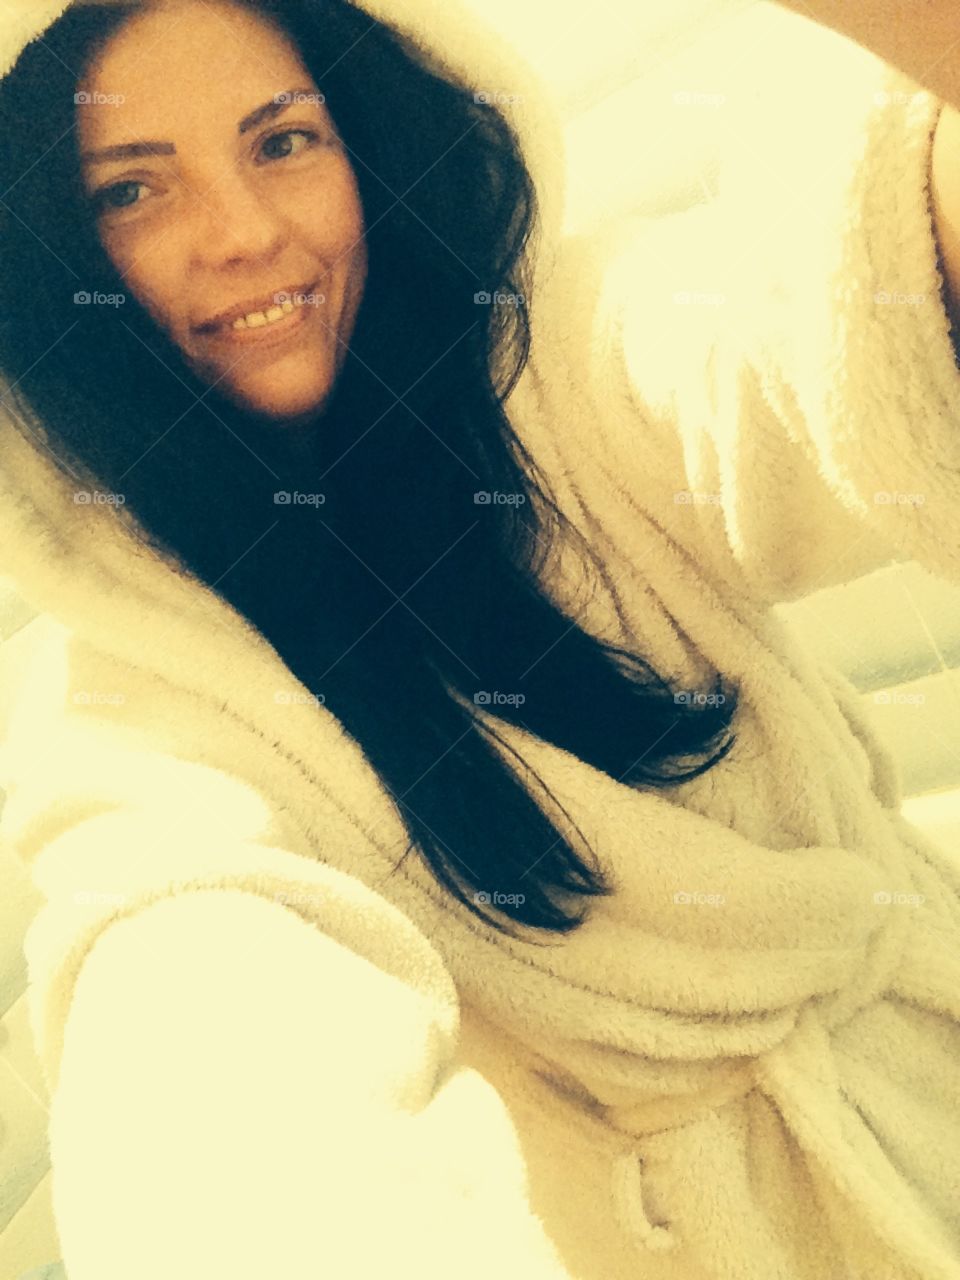 Smiling girl in the bath robe 